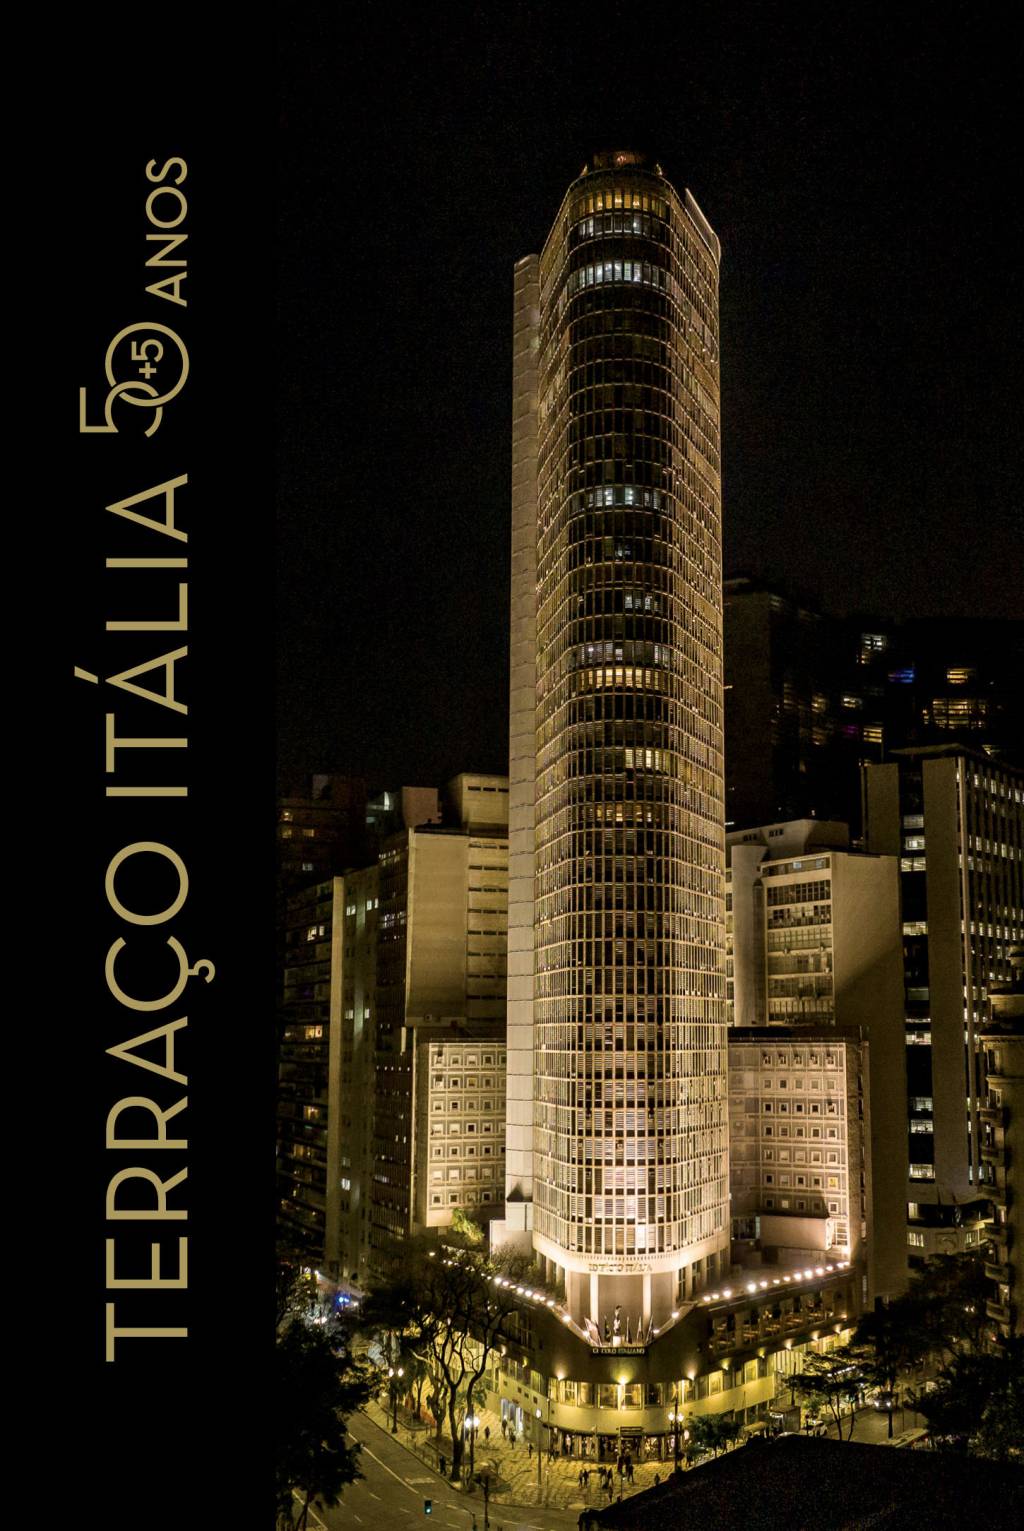 Capa exibe título 'Terraço Itália: 50+5 Anos' e foto de edifício.